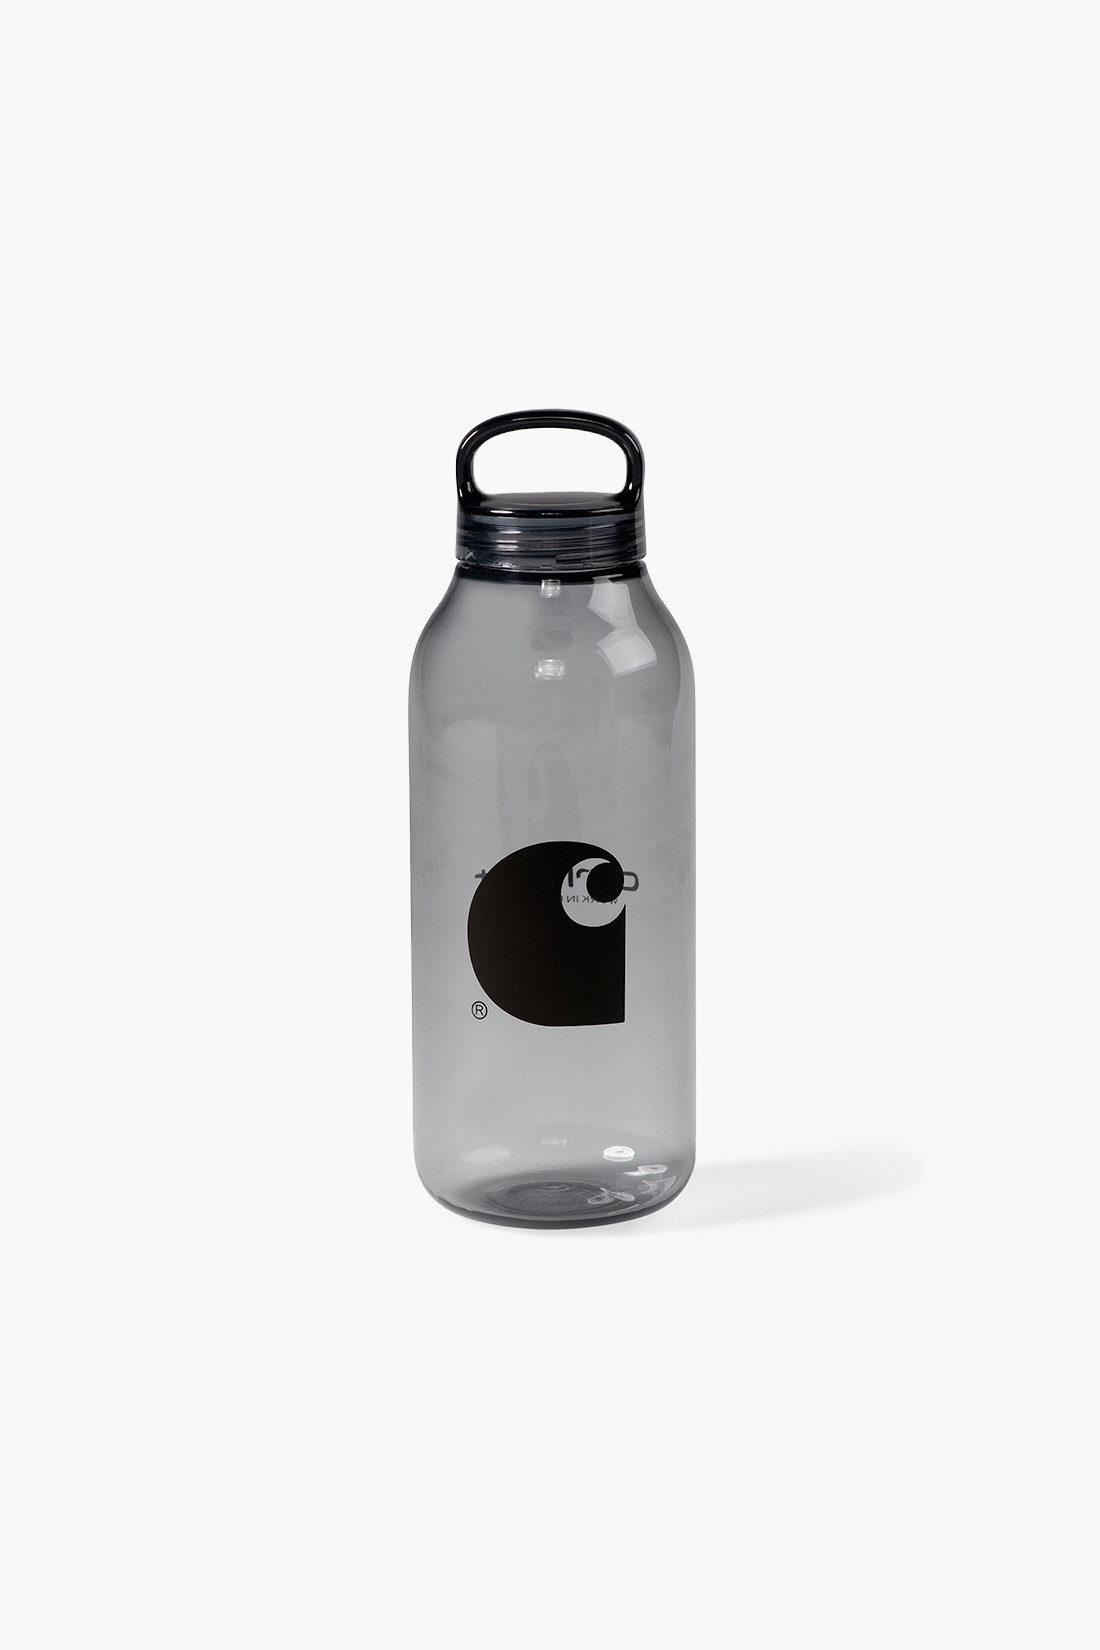 Kinto logo water bottle Smoke